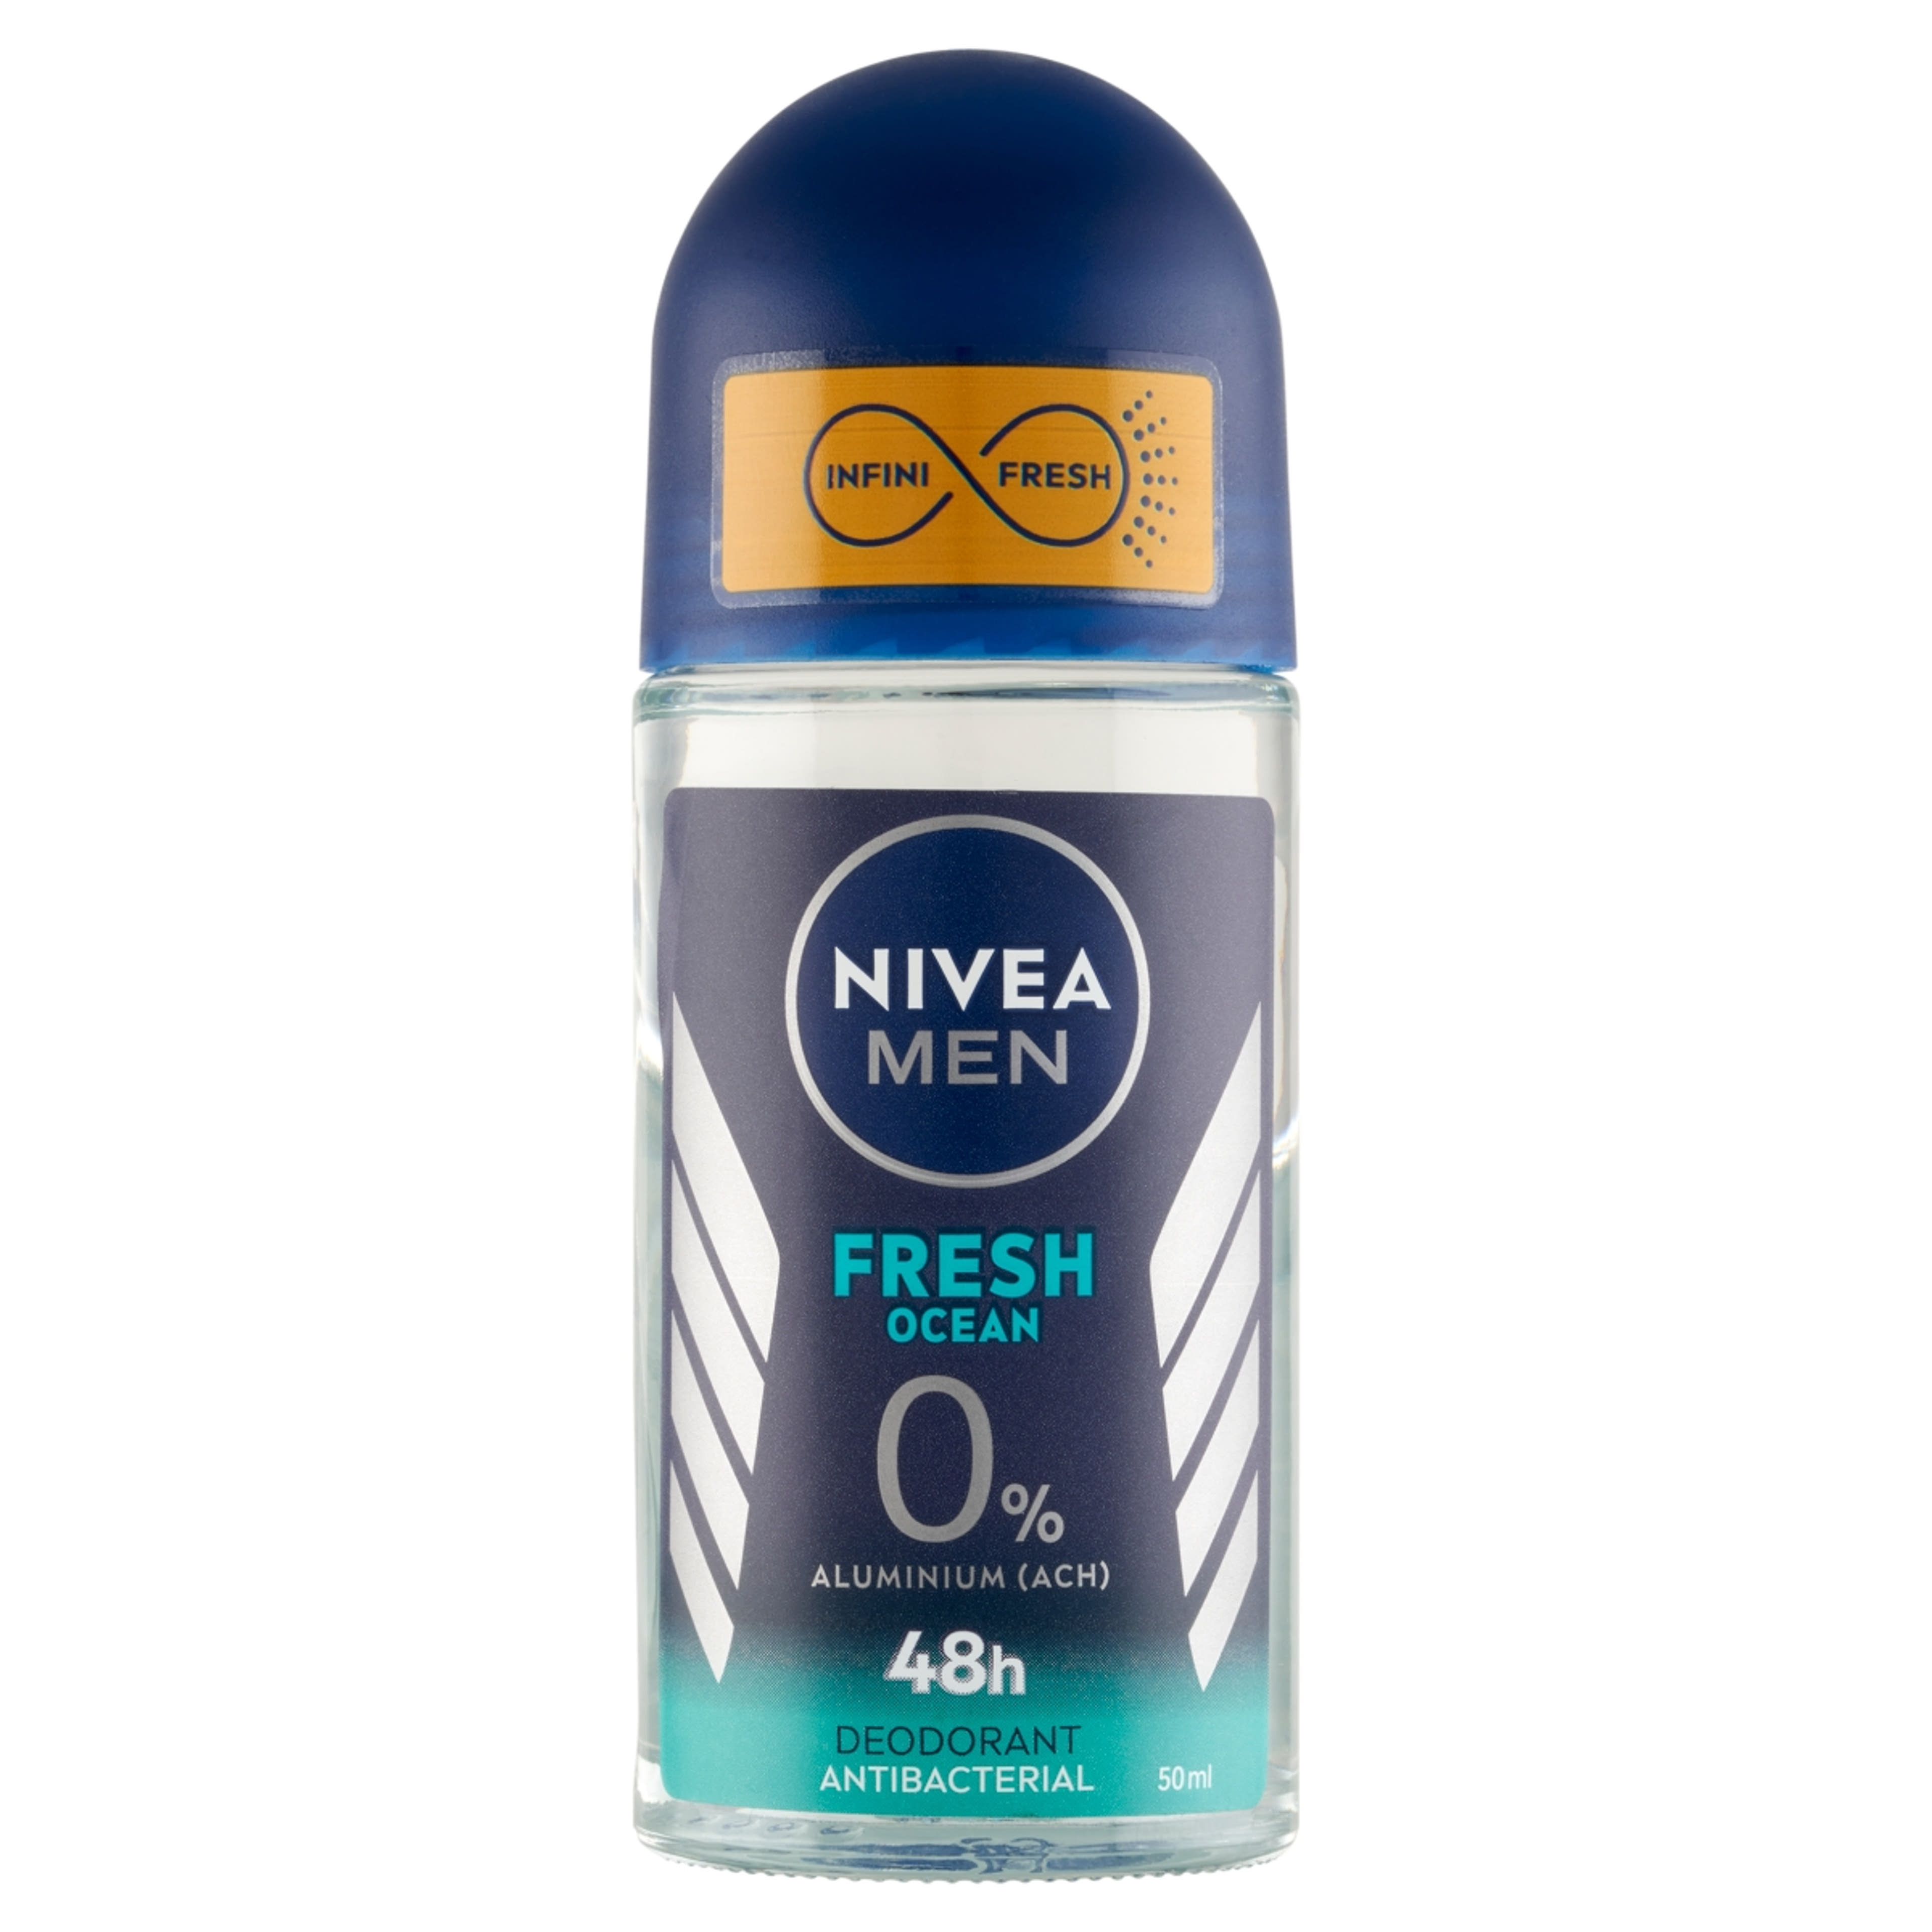 NIVEA MEN Golyós dezodor Fresh Ocean - 50 ml